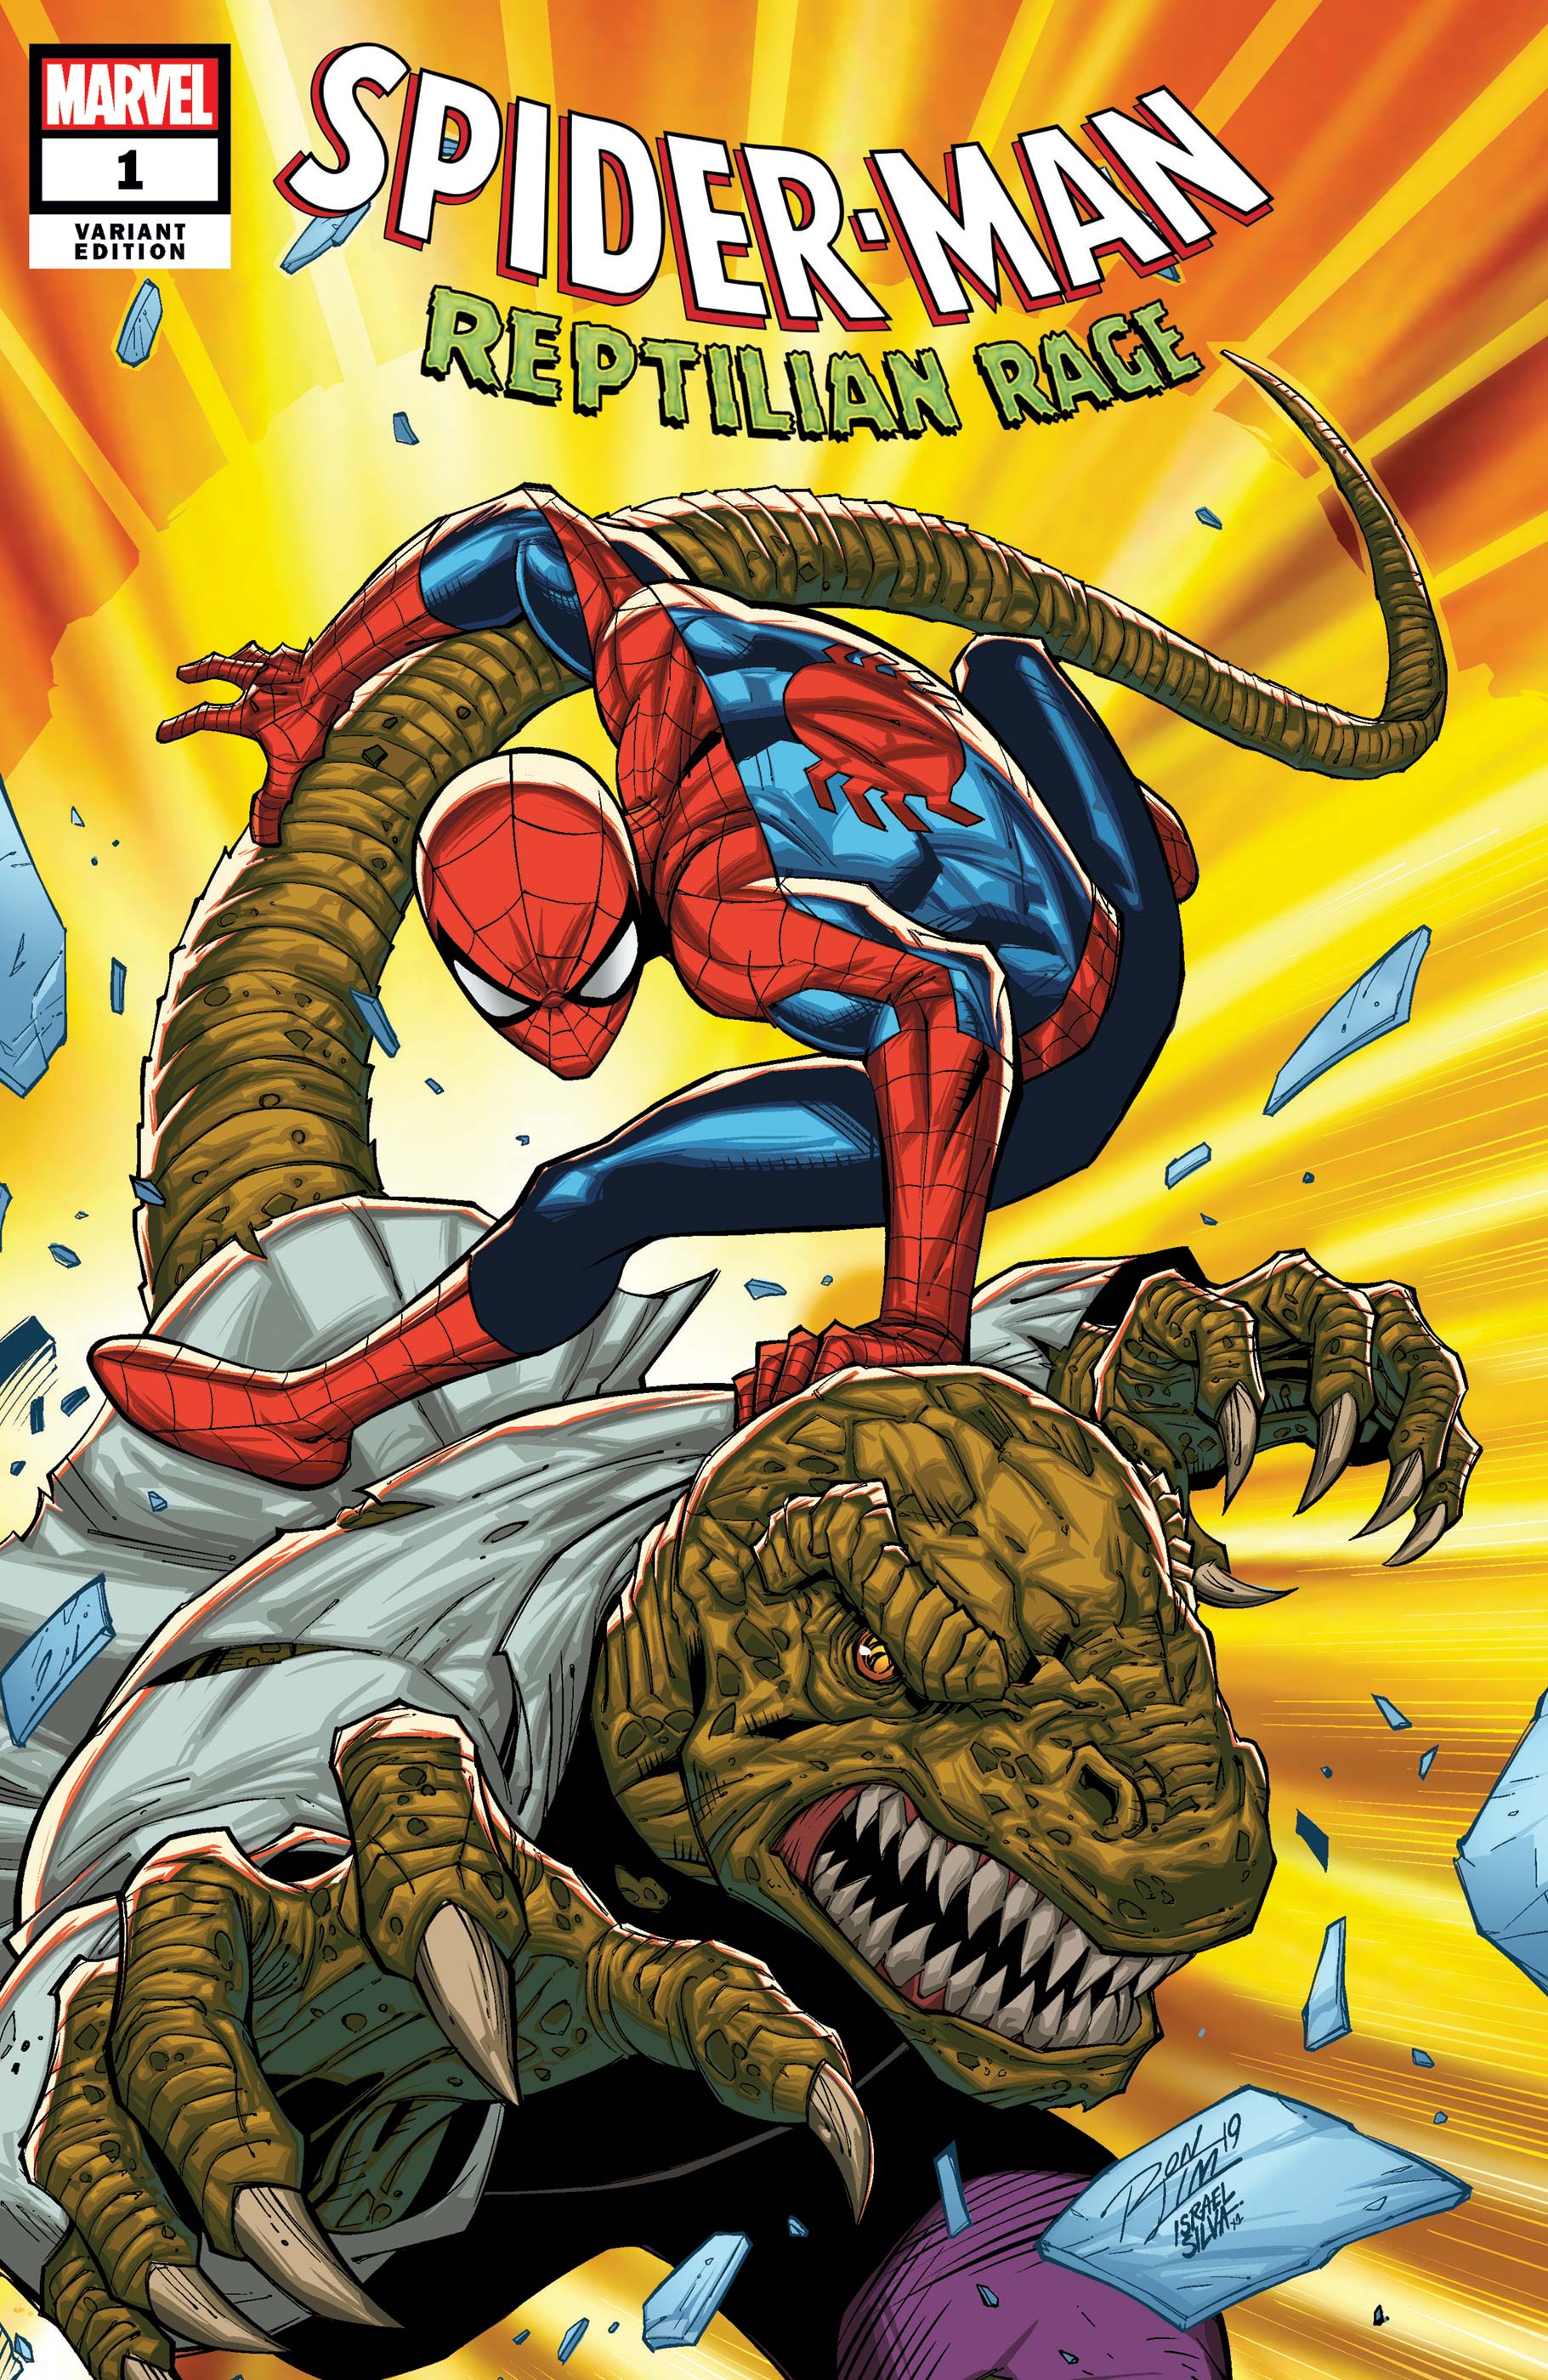 Spider-Man: Reptilian Rage (2019) #1 (Variant)